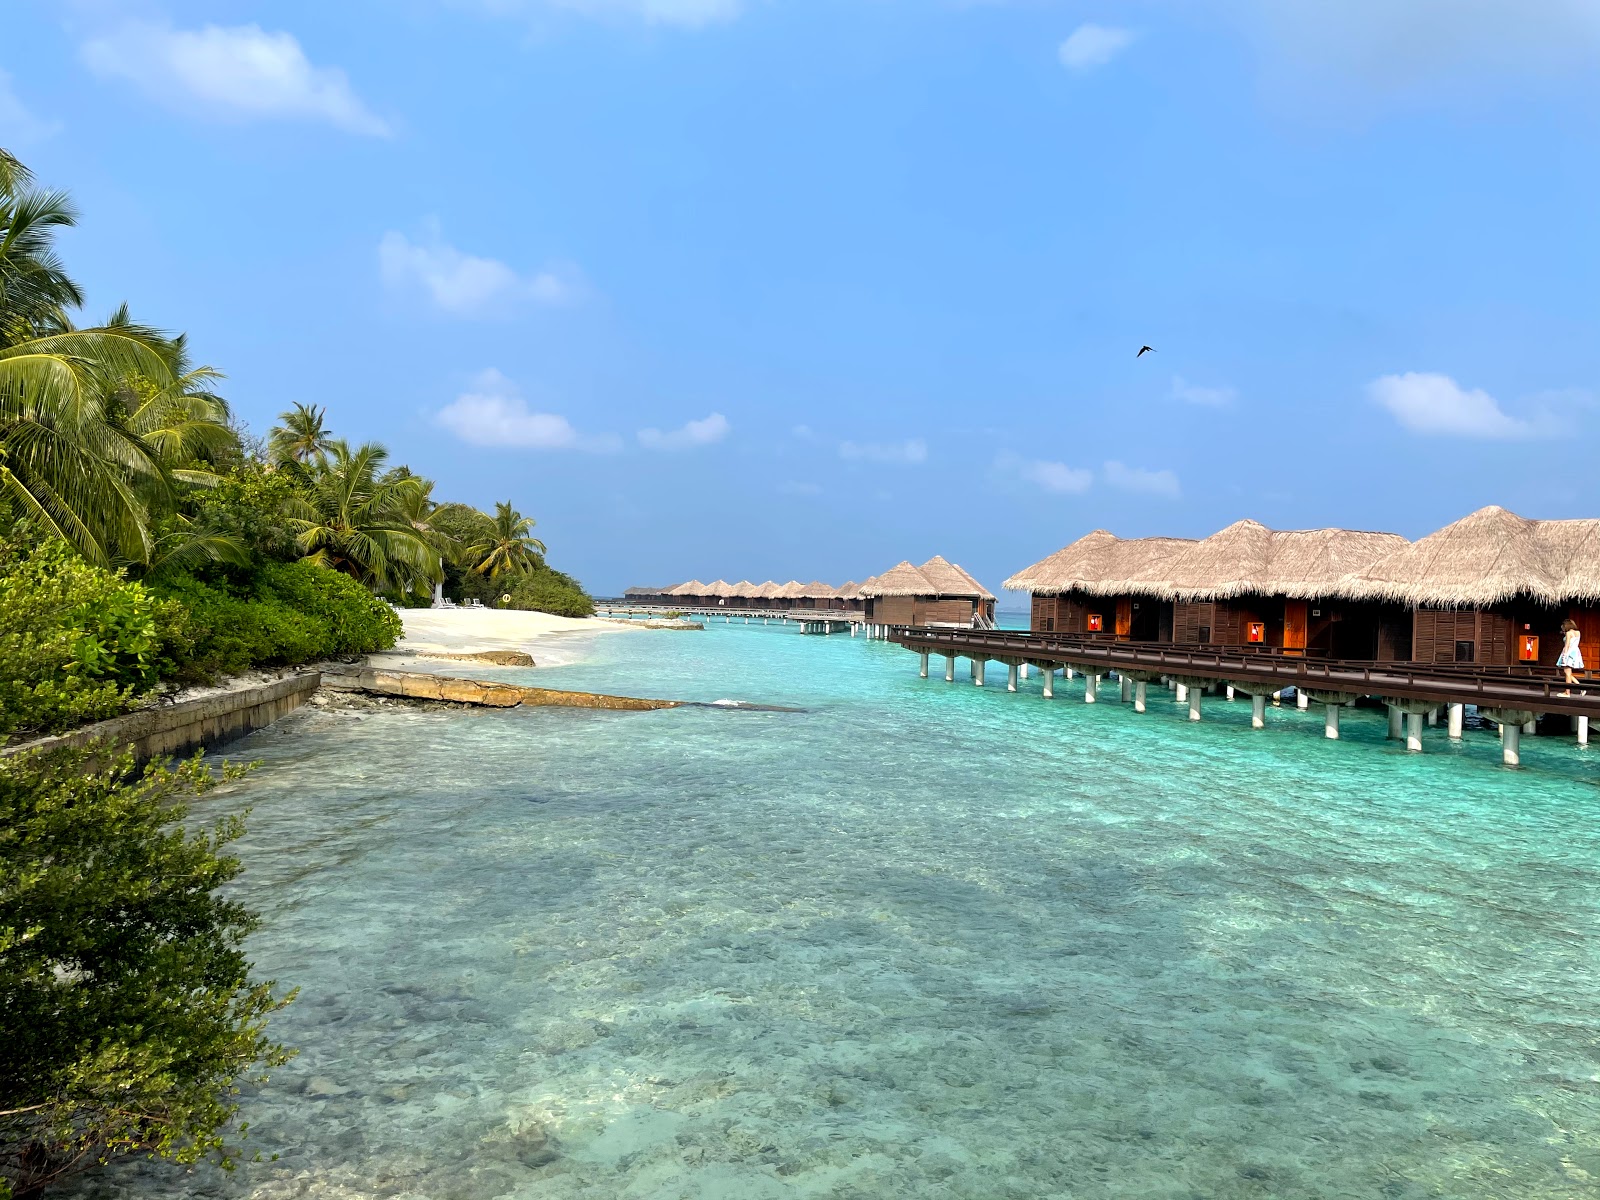 Foto de Sheraton Resort Island - lugar popular entre os apreciadores de relaxamento